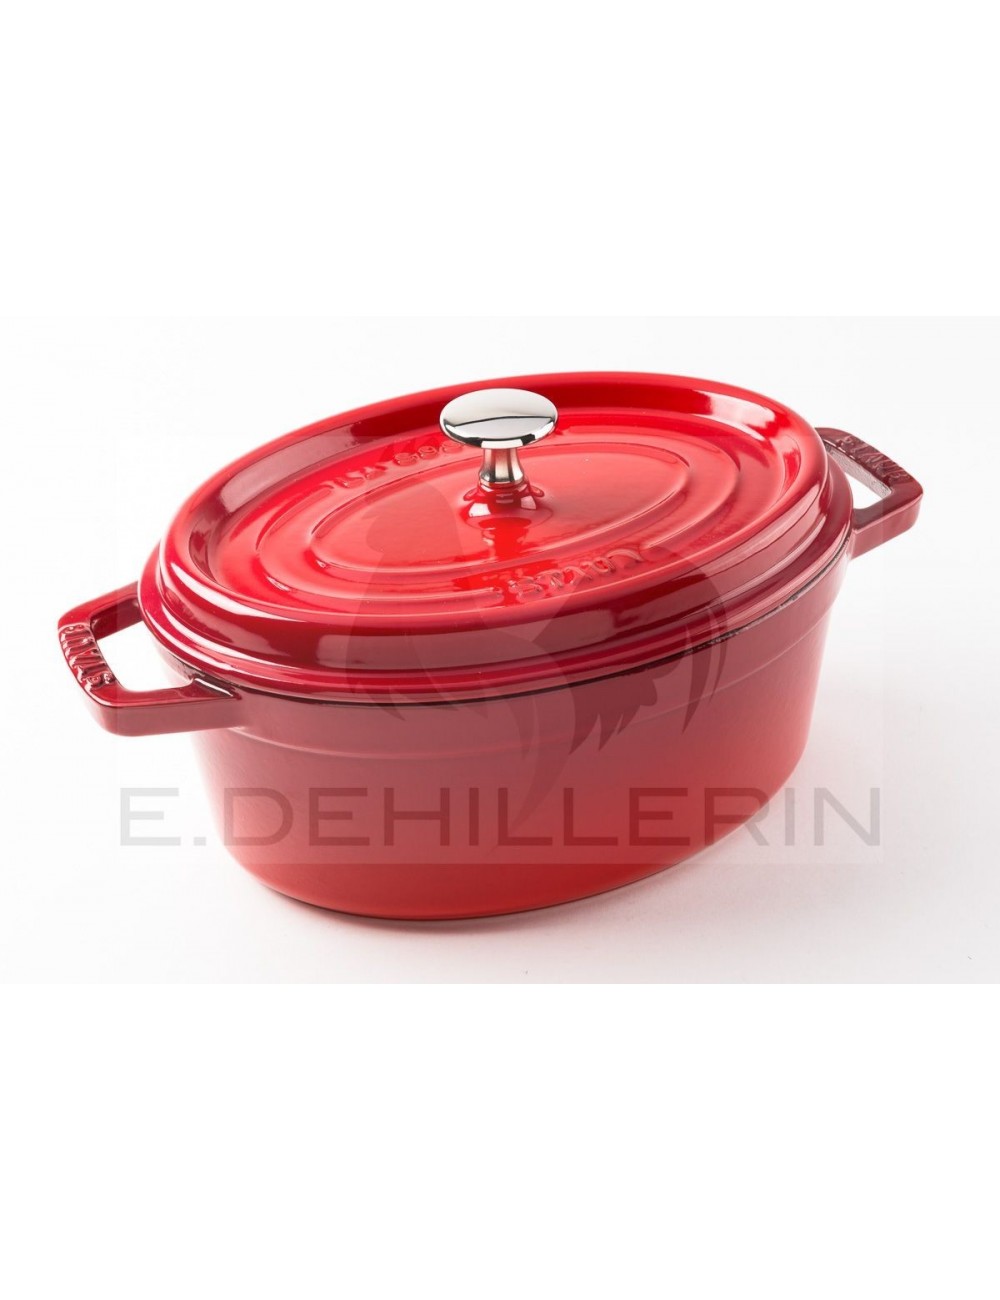 https://www.edehillerin.fr/894-large_default/casserole-cast-iron-oval-red-staub.jpg